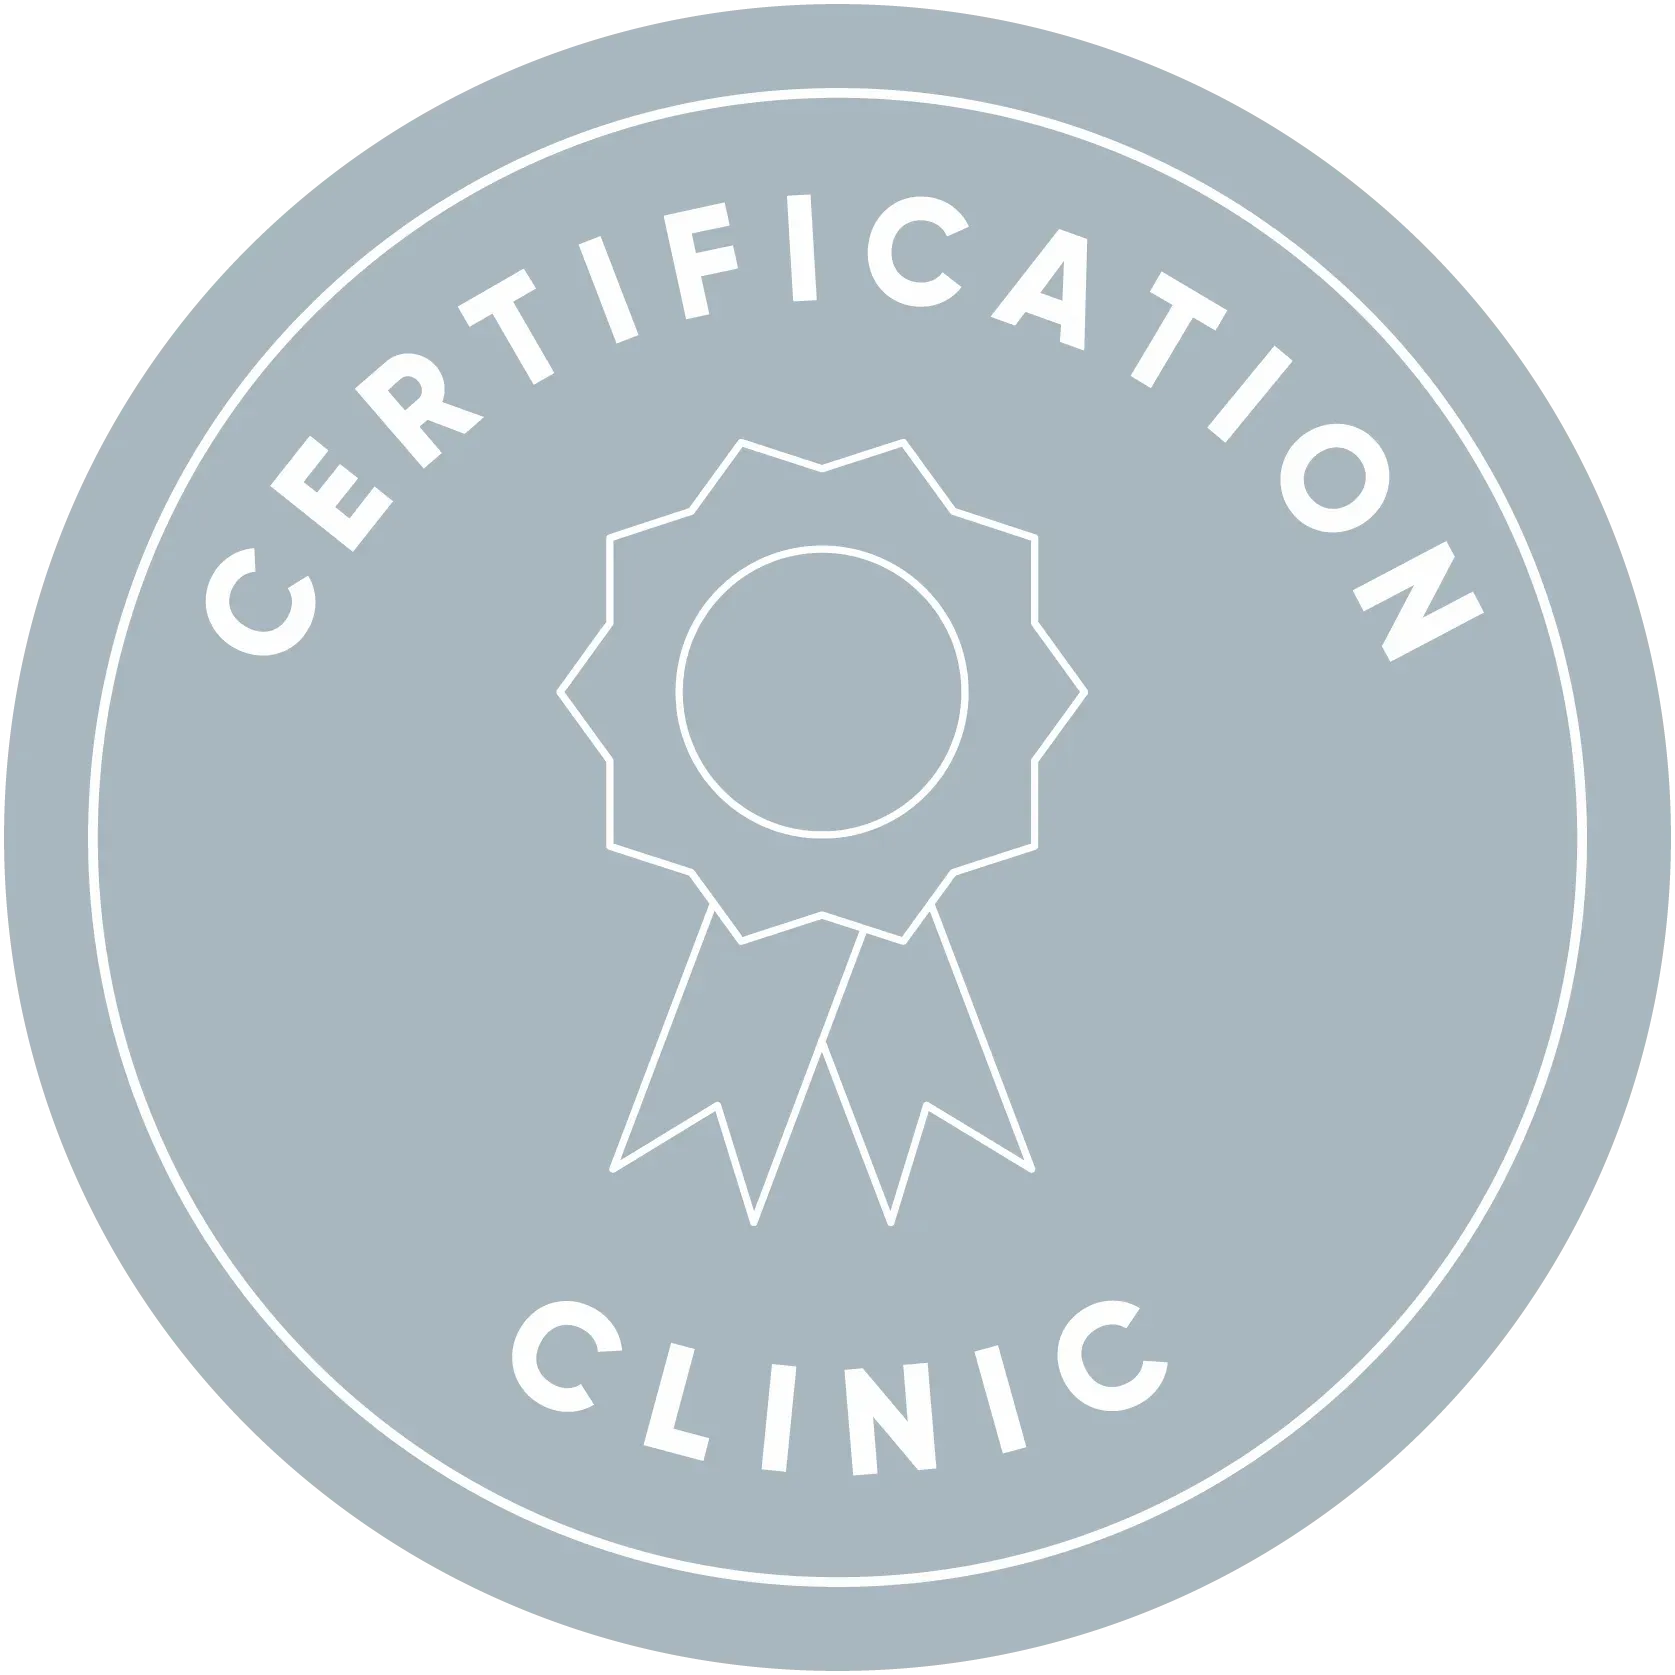 Certification Clinic logo